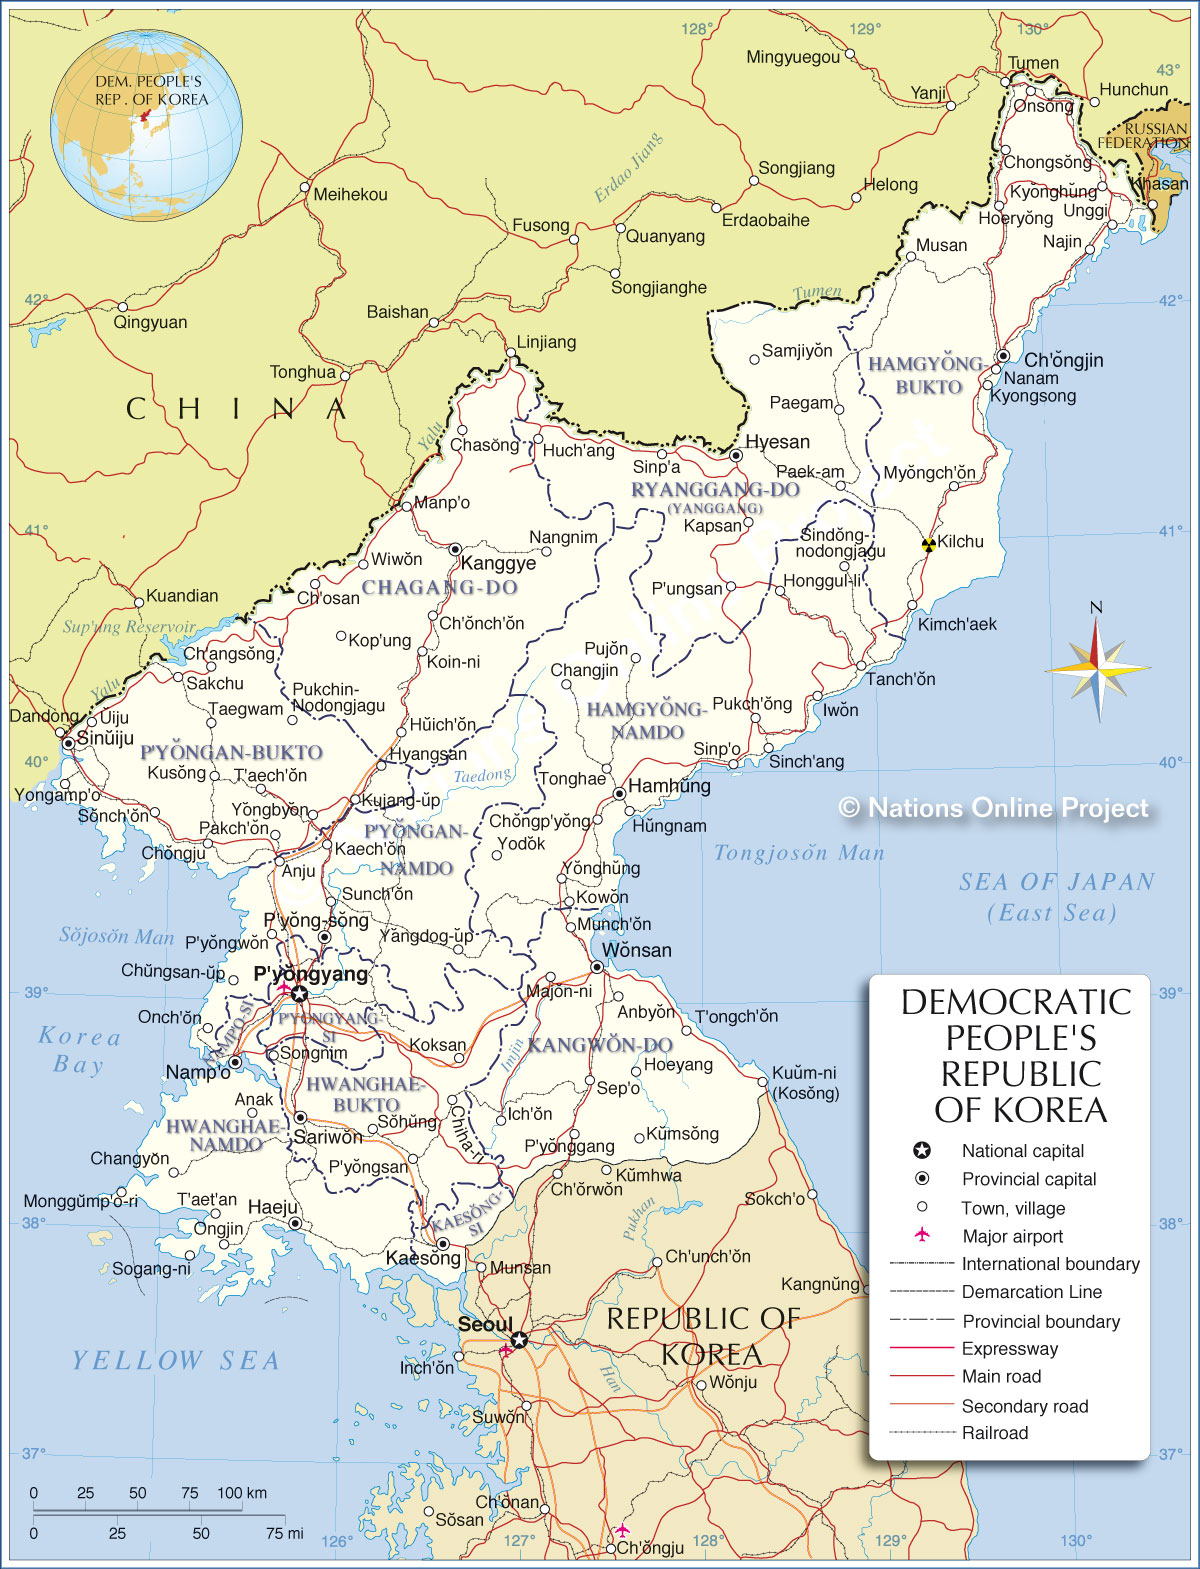  Korea  Utara  Democratic People s Republic of Korea  